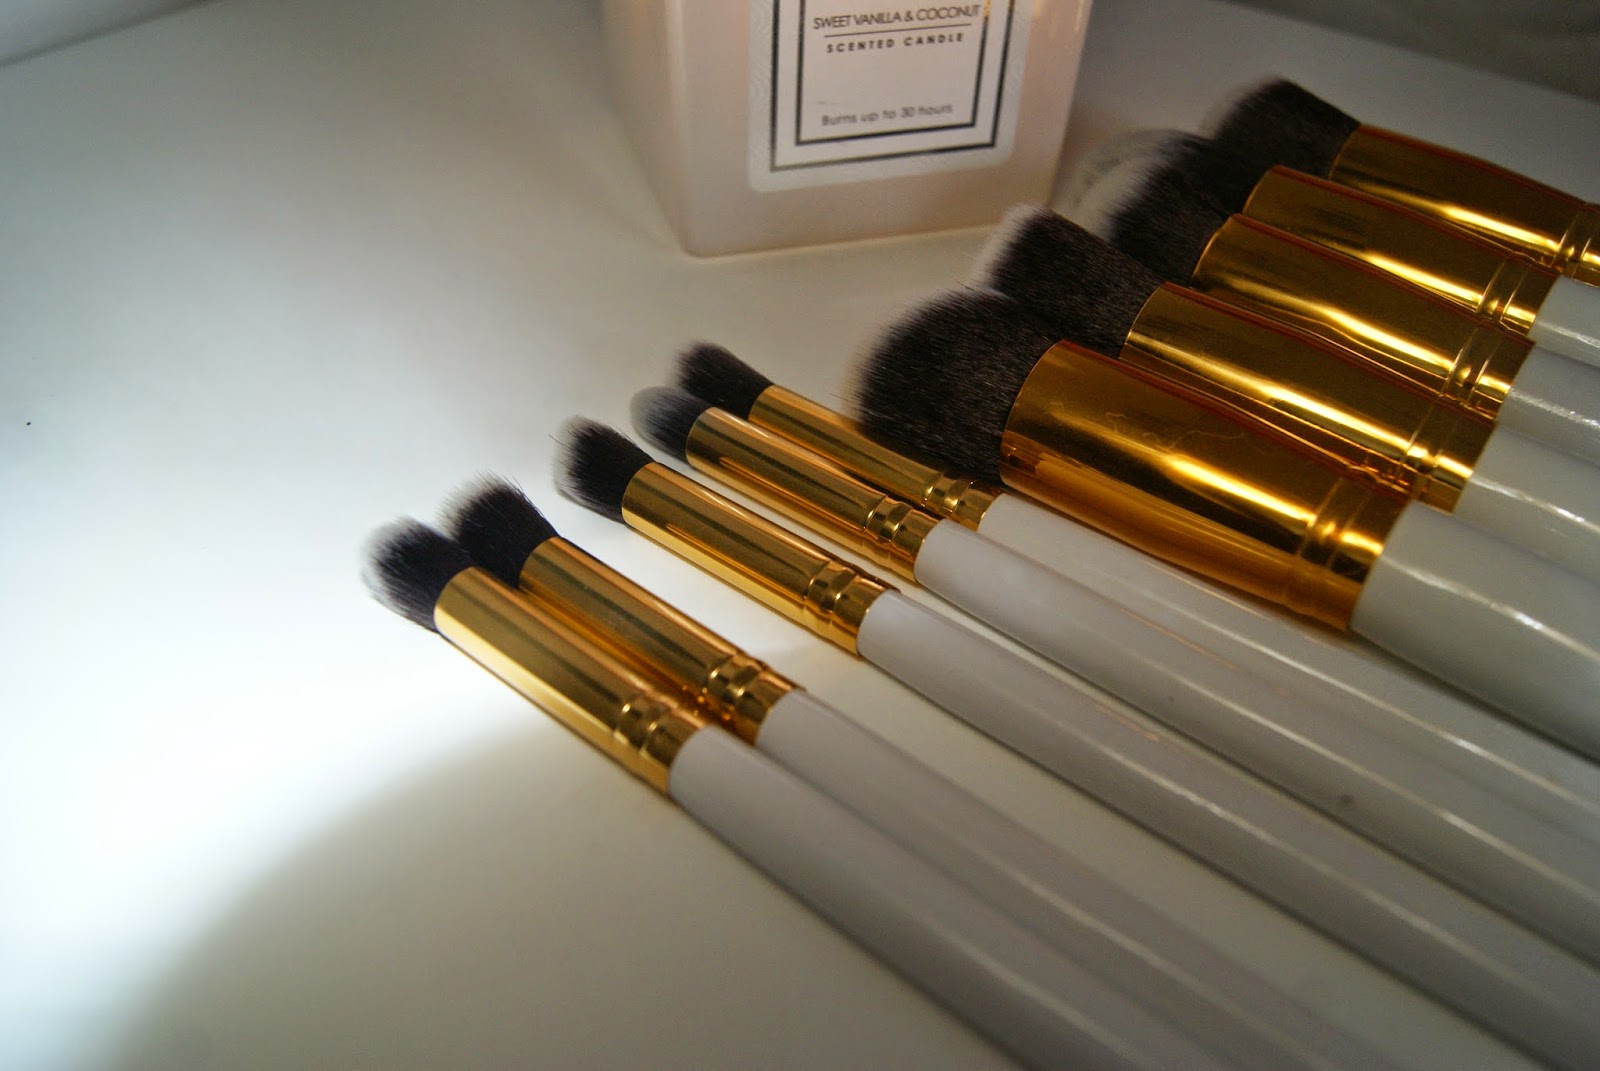 Beauty: Cheap and cheerful ebay makeup brush set - HKPR